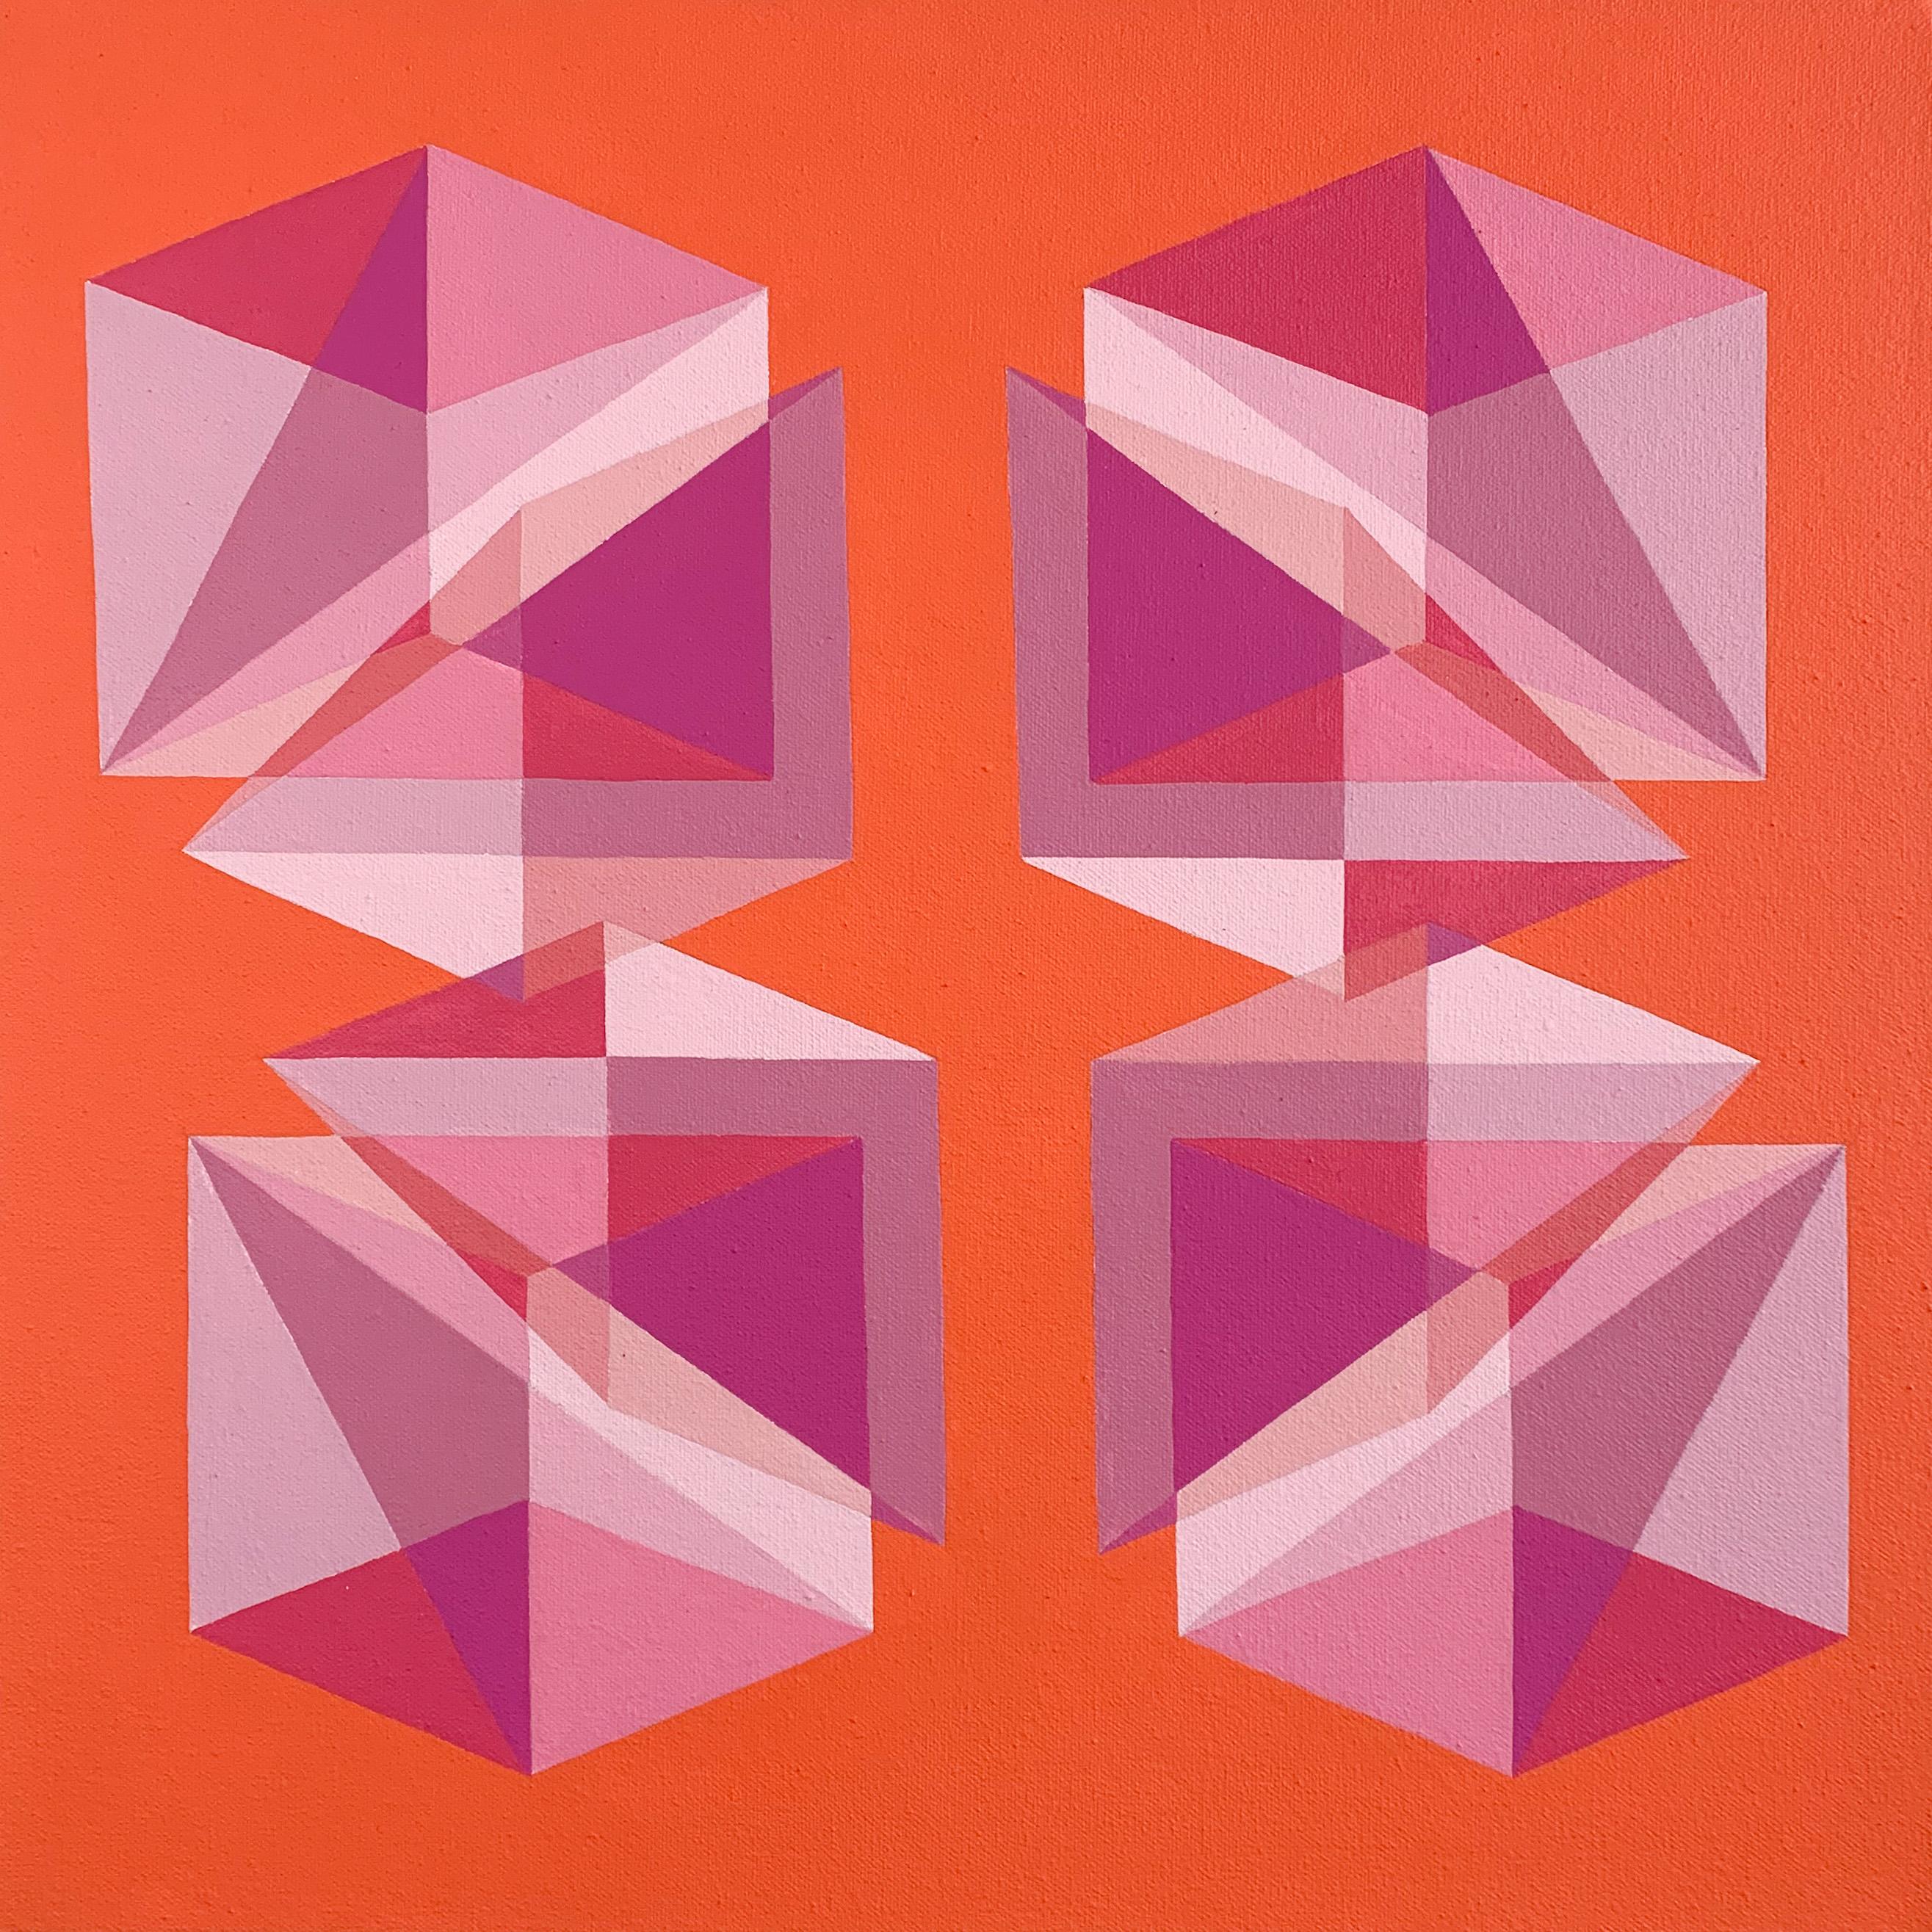 Abstract geometric Op Art painting w/ pink, magenta & orange cubes & pyramids